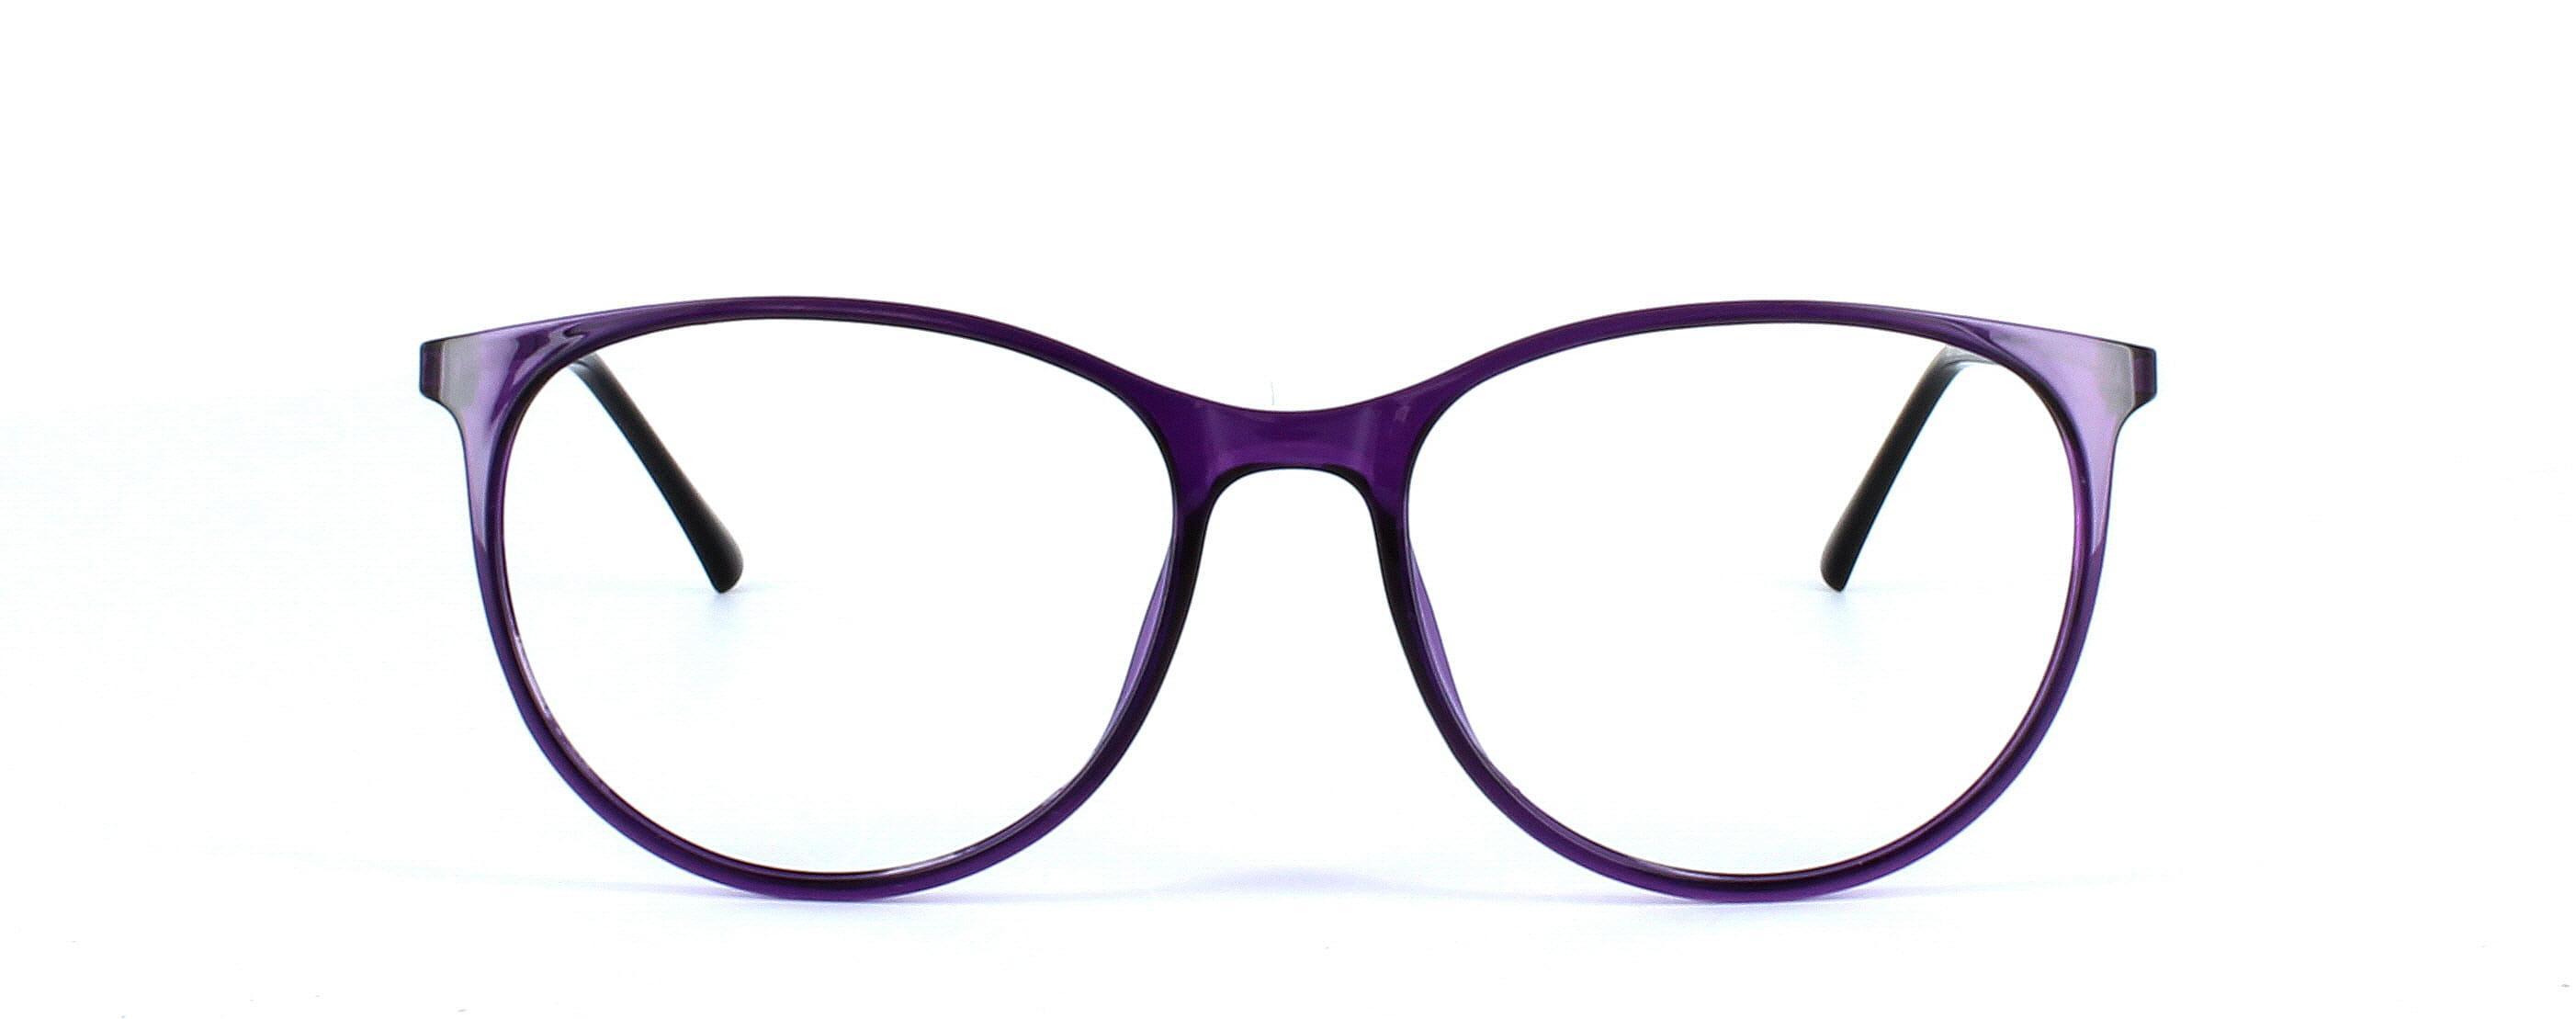 Aquila - Ladies plastic glasses frame in purple - image view 5